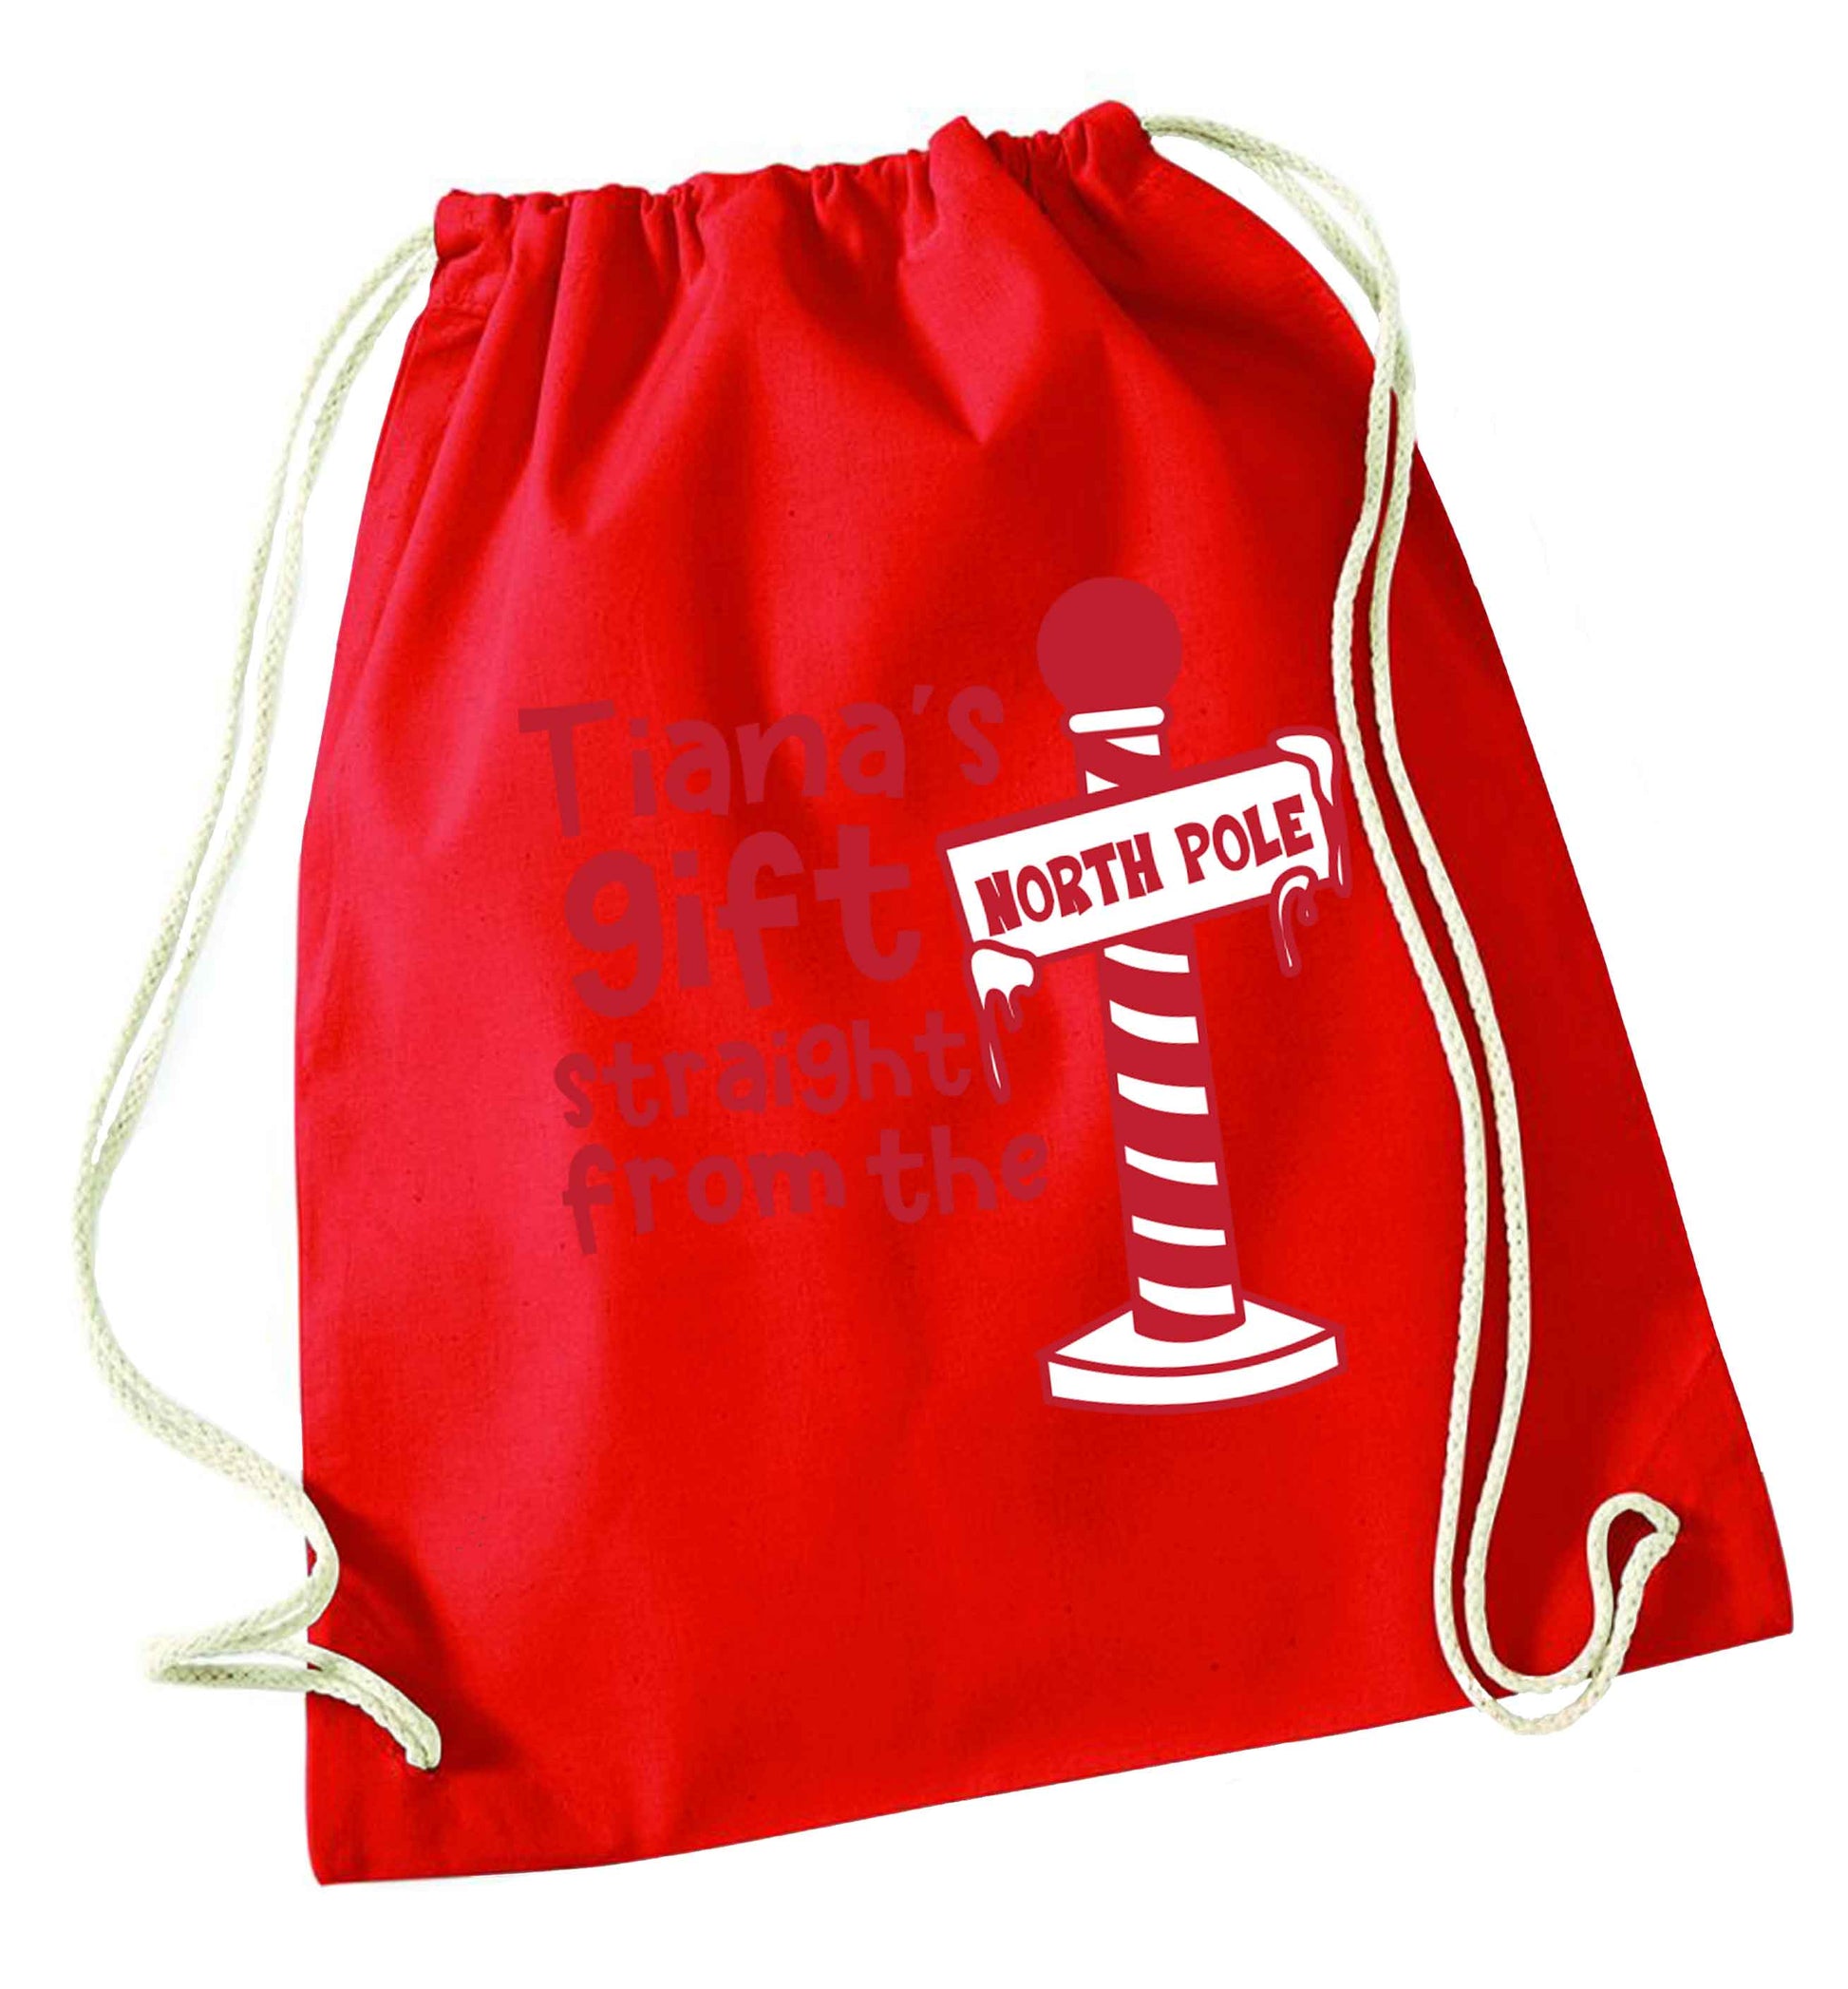 Merry Christmas red drawstring bag 